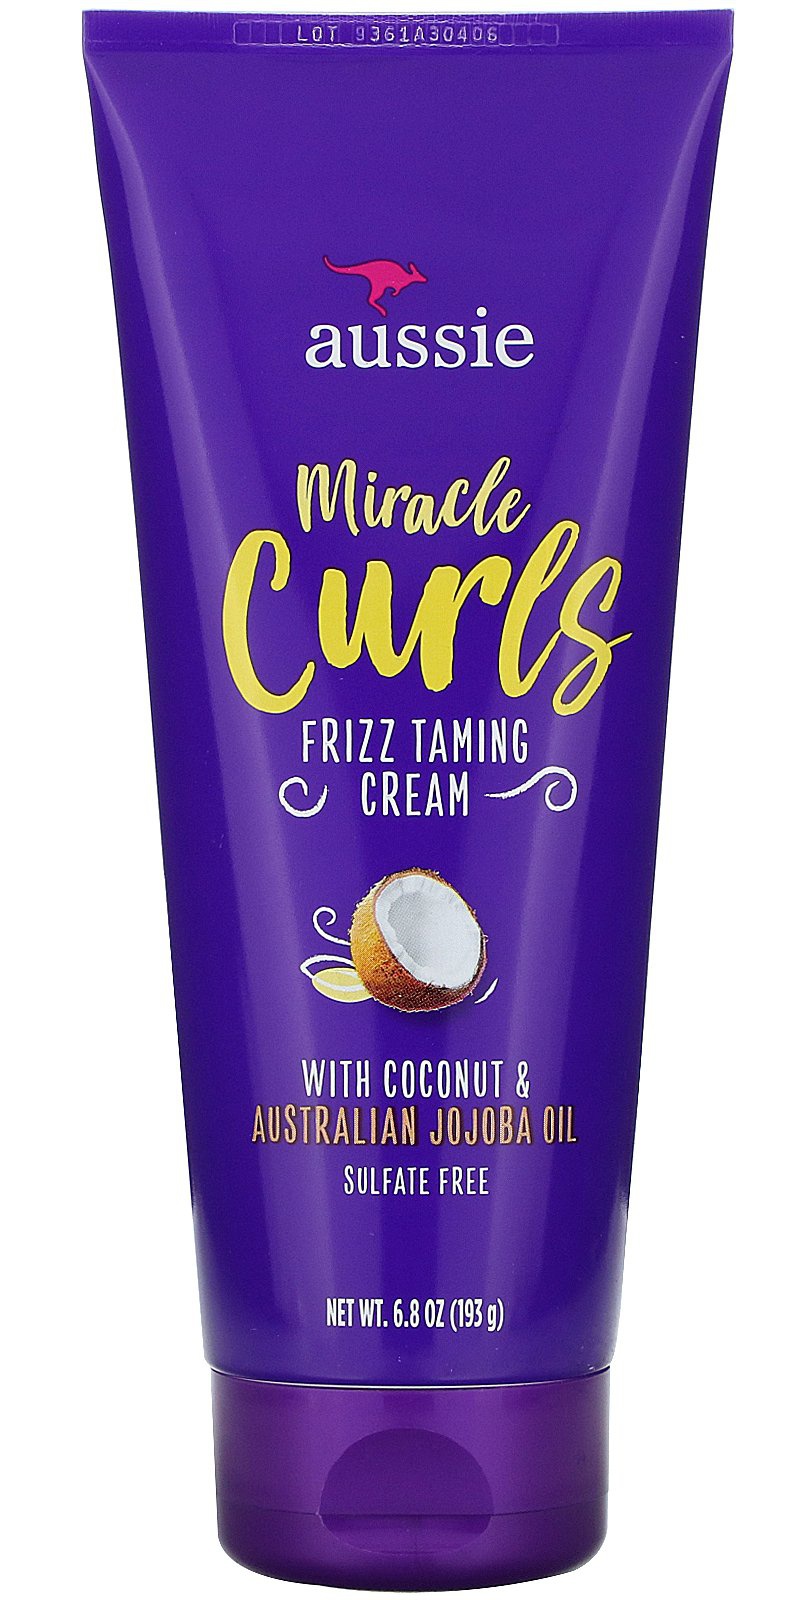 Aussie Miracle Curls, Frizz Taming Cream, Coconut & Australian Jojoba Oil